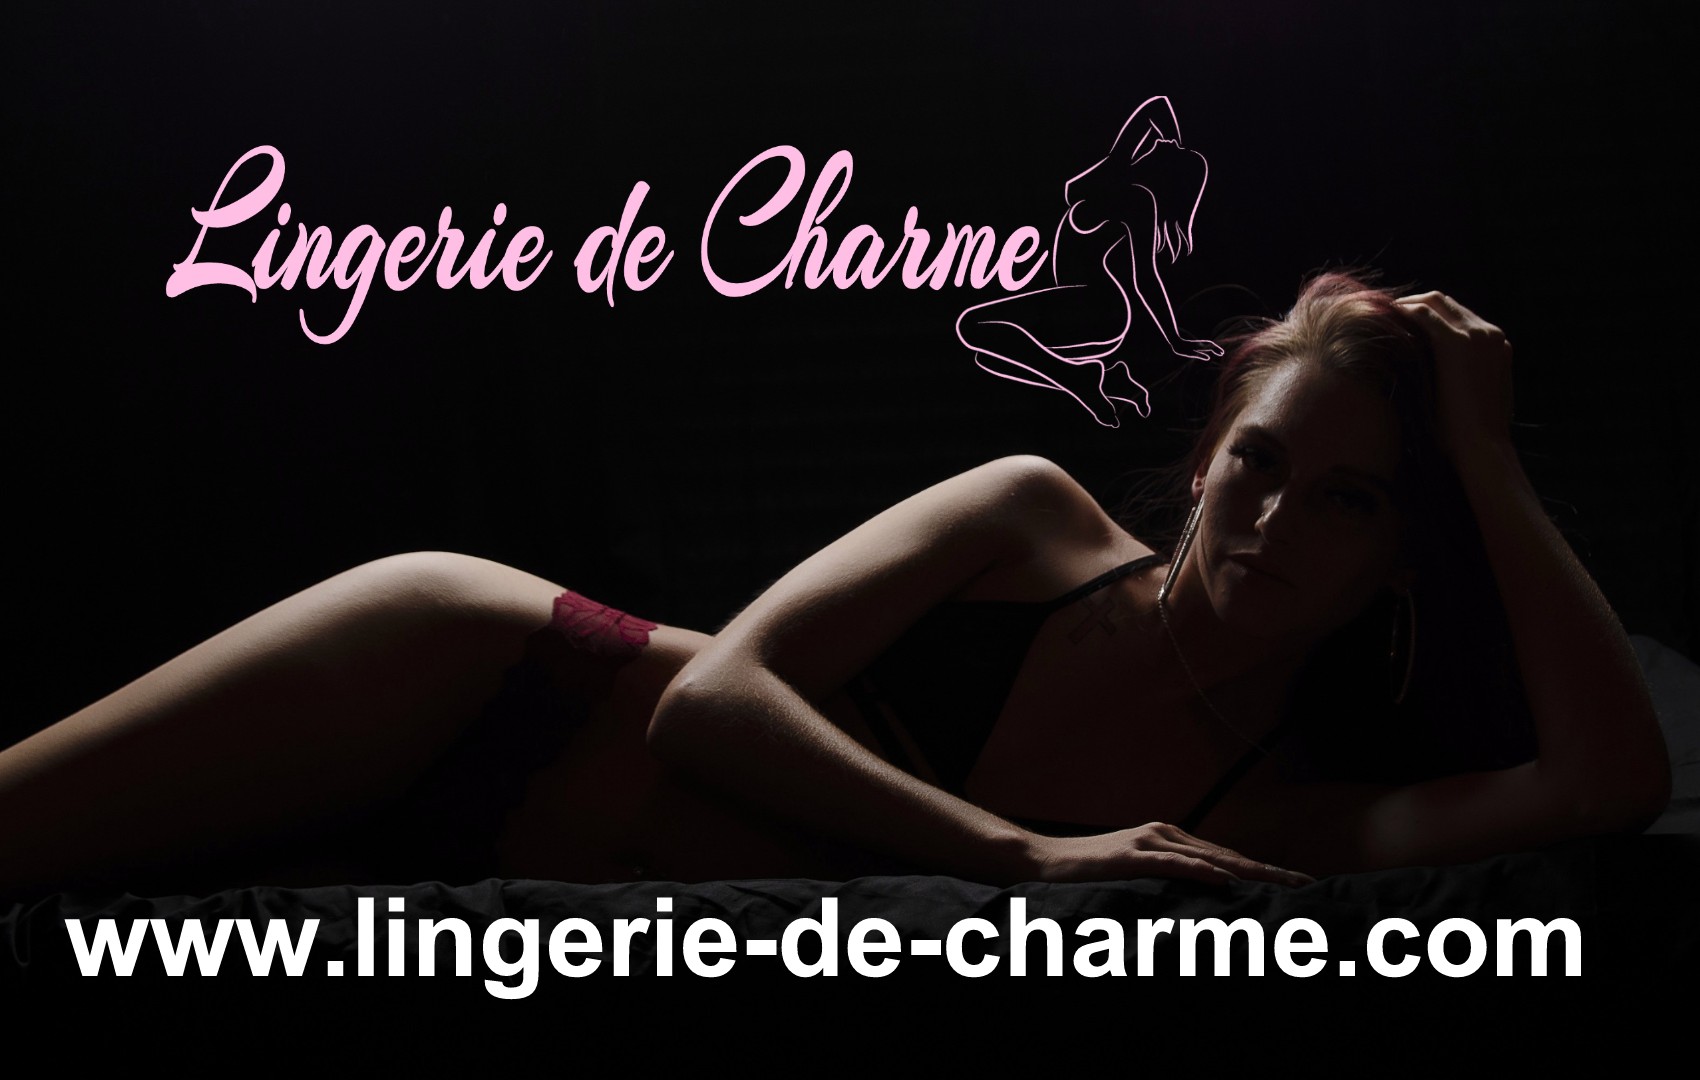 LINGERIE DE CHARME ANGOULINS 17 - LINGERIE SEXY ANGOULINS 17